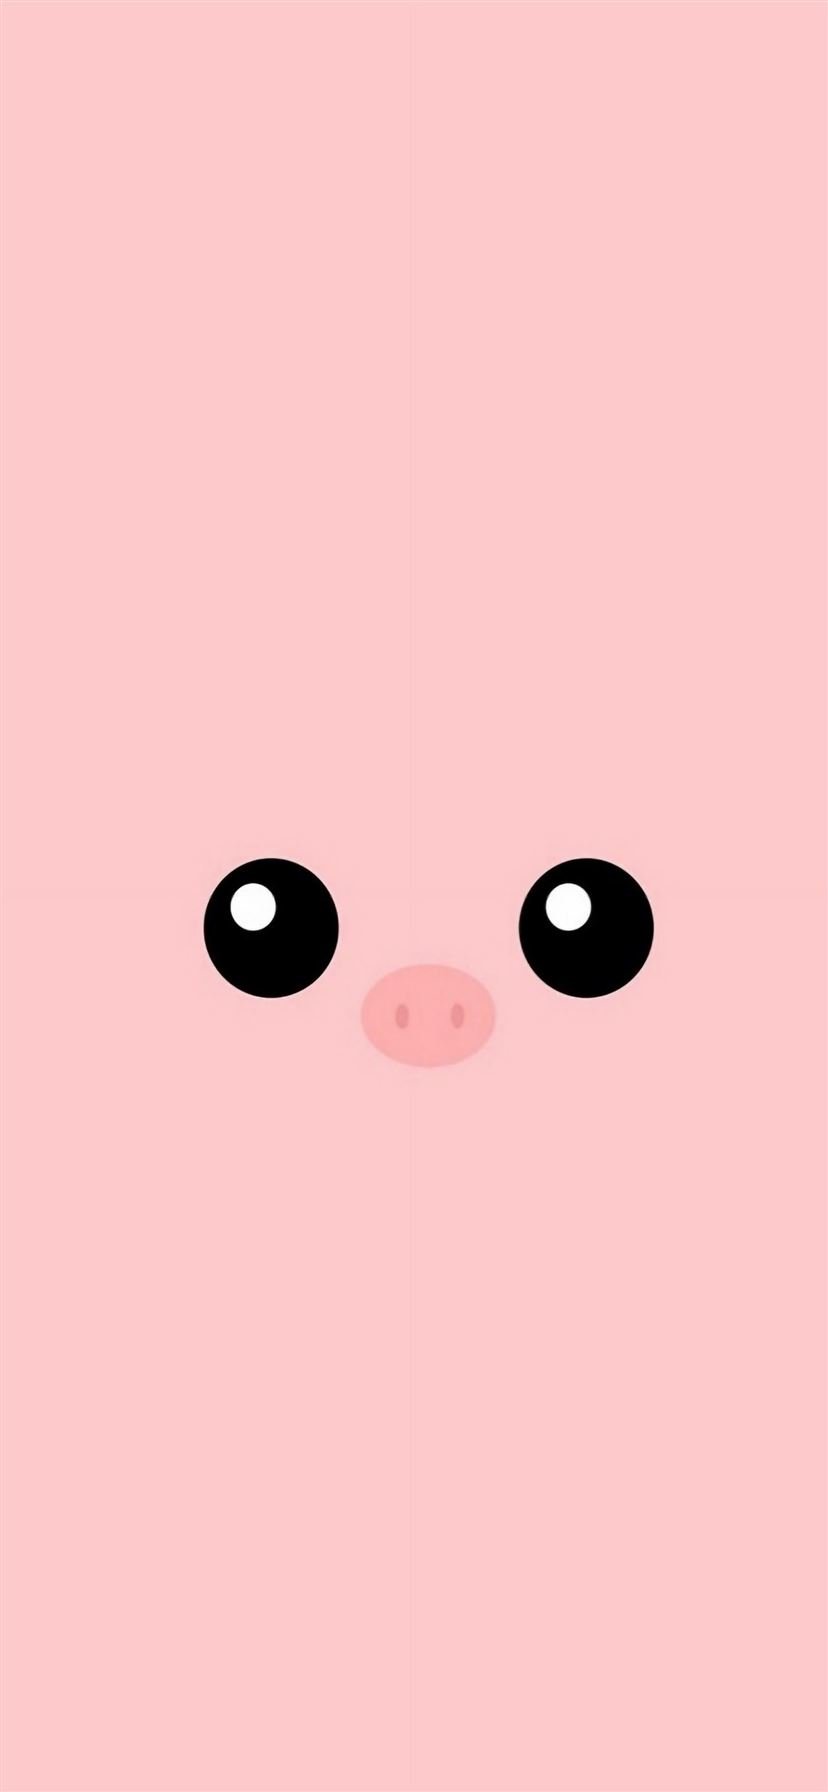 Minimal Pink Piggy Cute Eyes iPhone Wallpaper Free Download